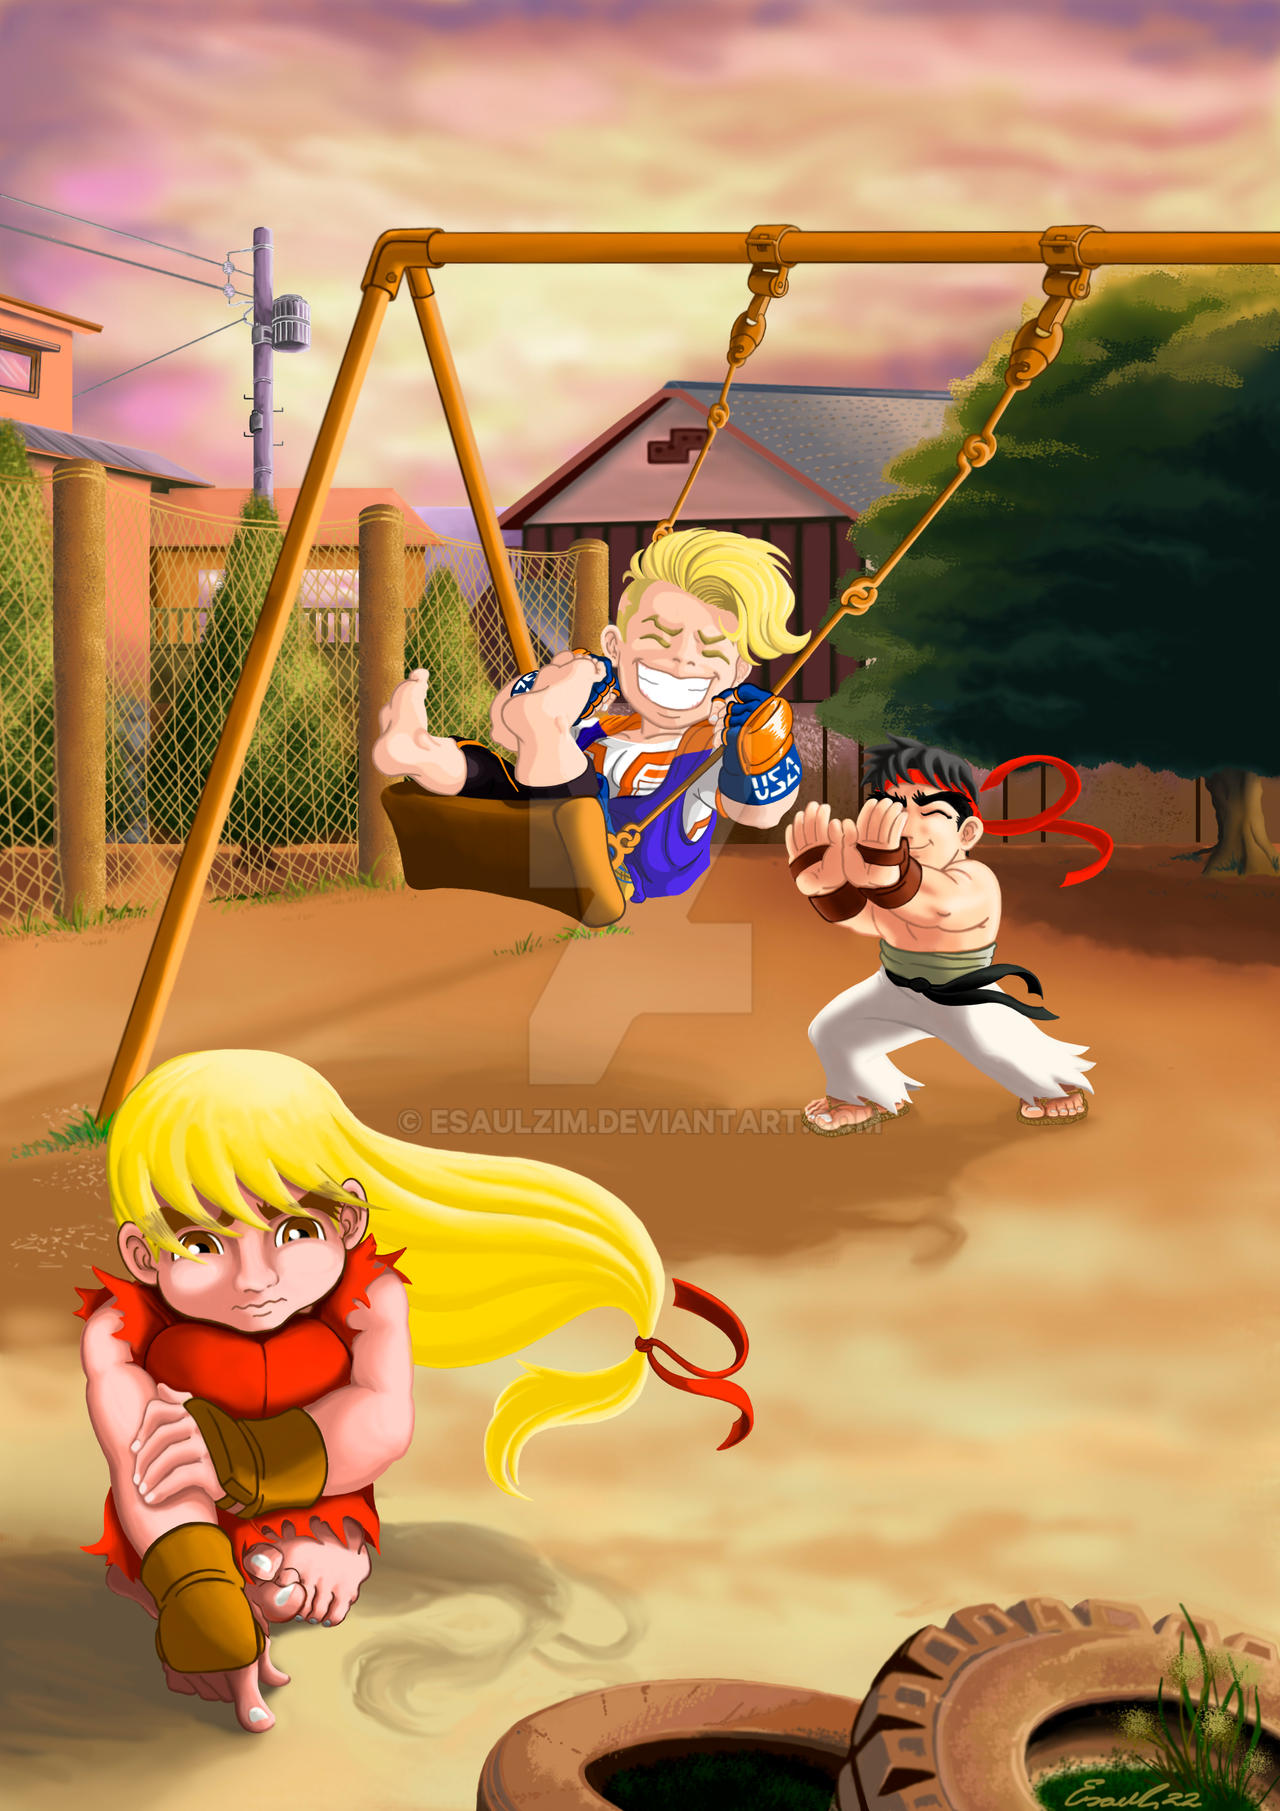 Ryu street fighter - Playground